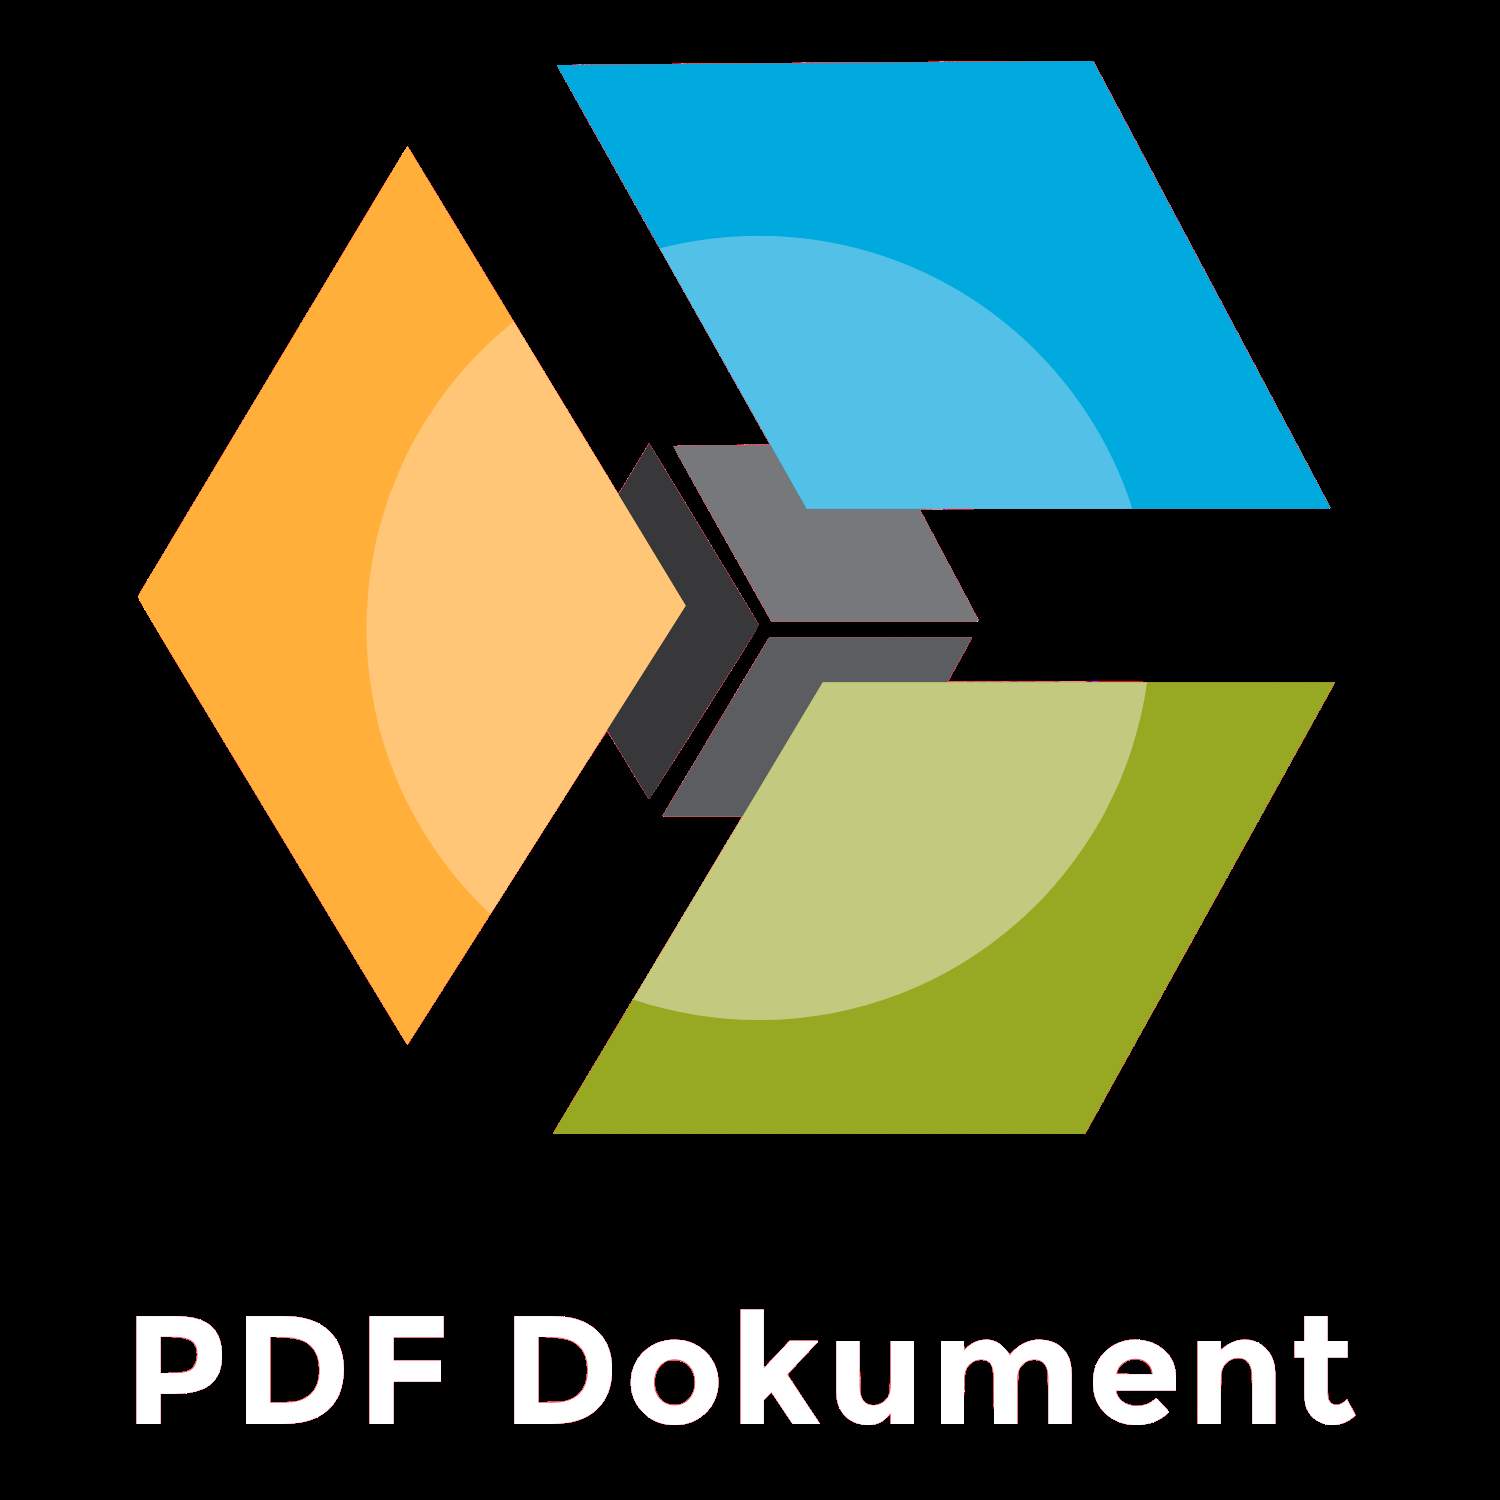 pdfdokument logo